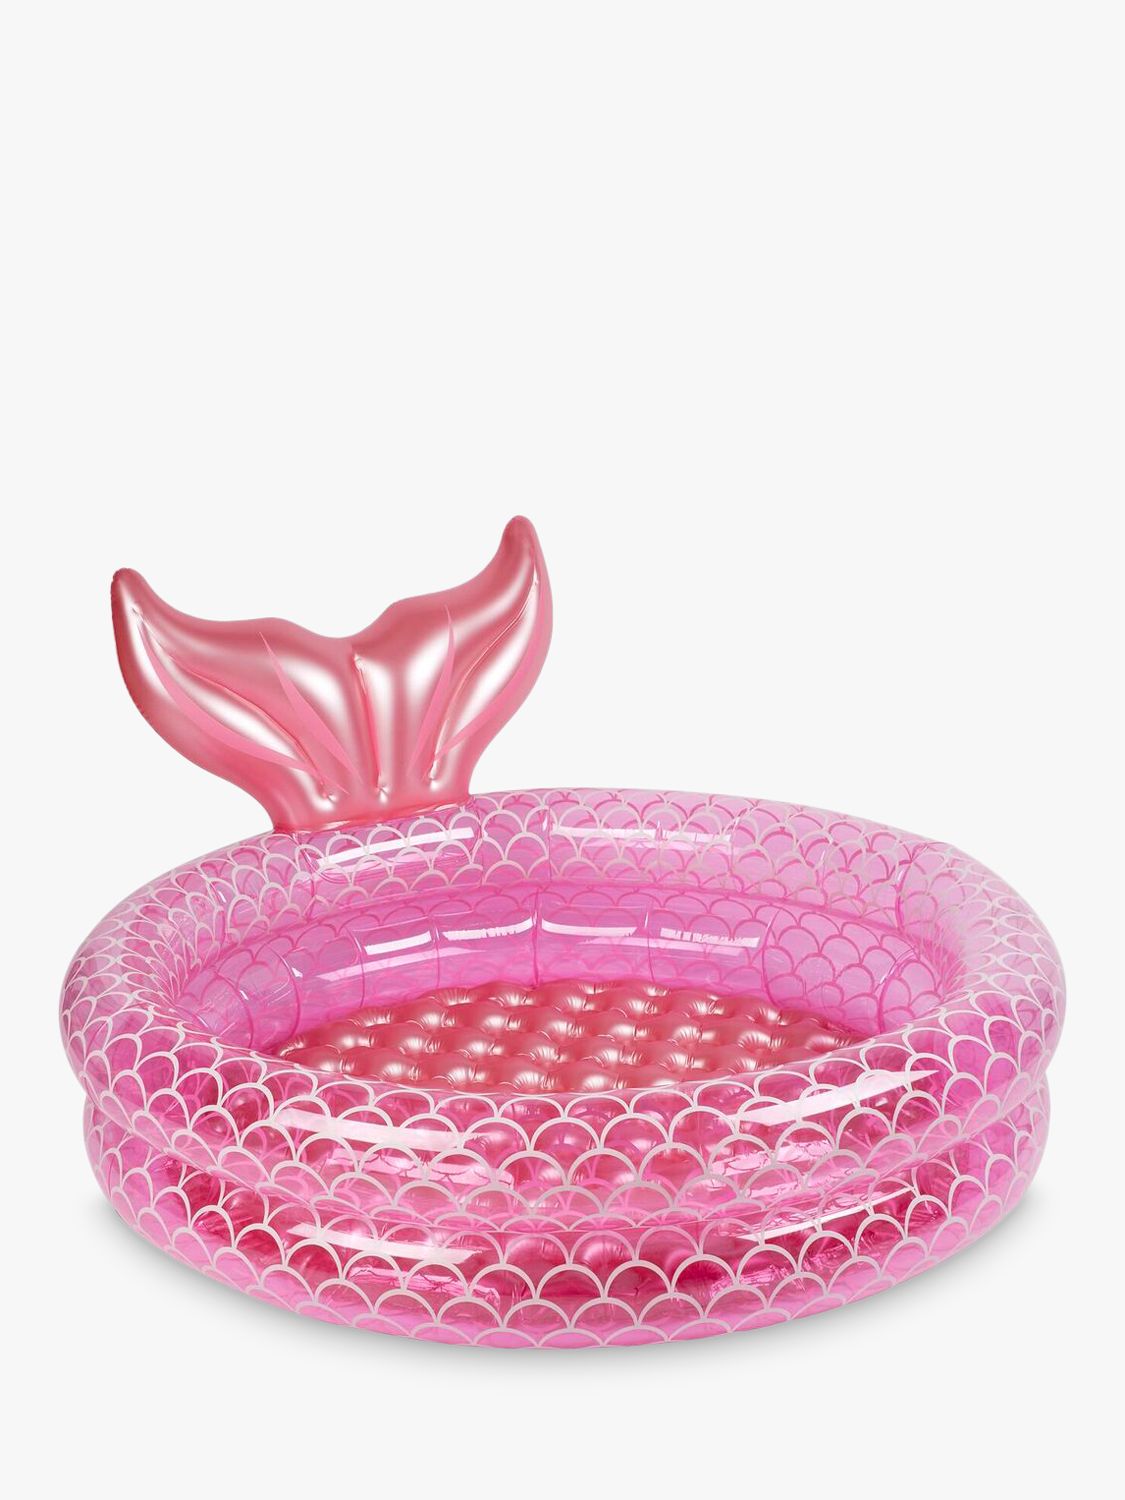 Sunnykids Inflatable Backyard Mermaid Pool, Pink